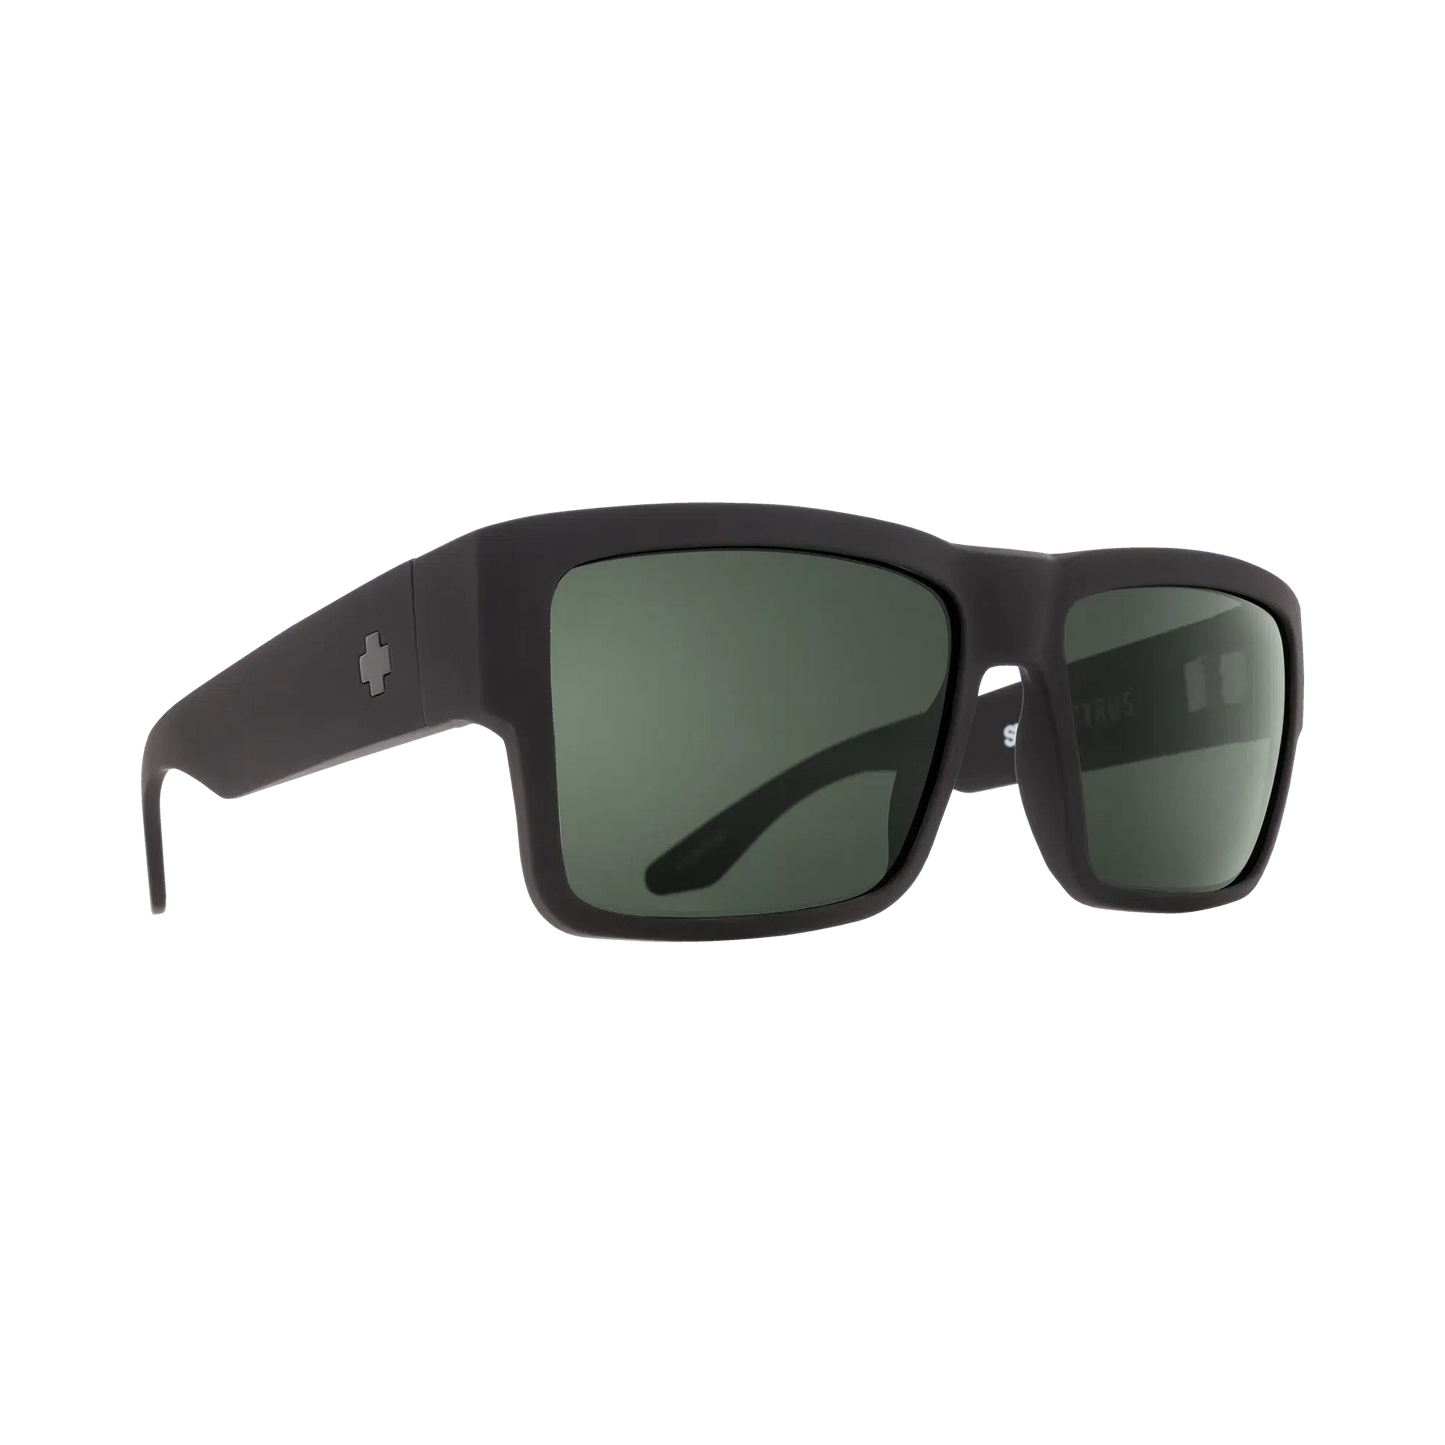 Spy Cyrus Black Sunglasses